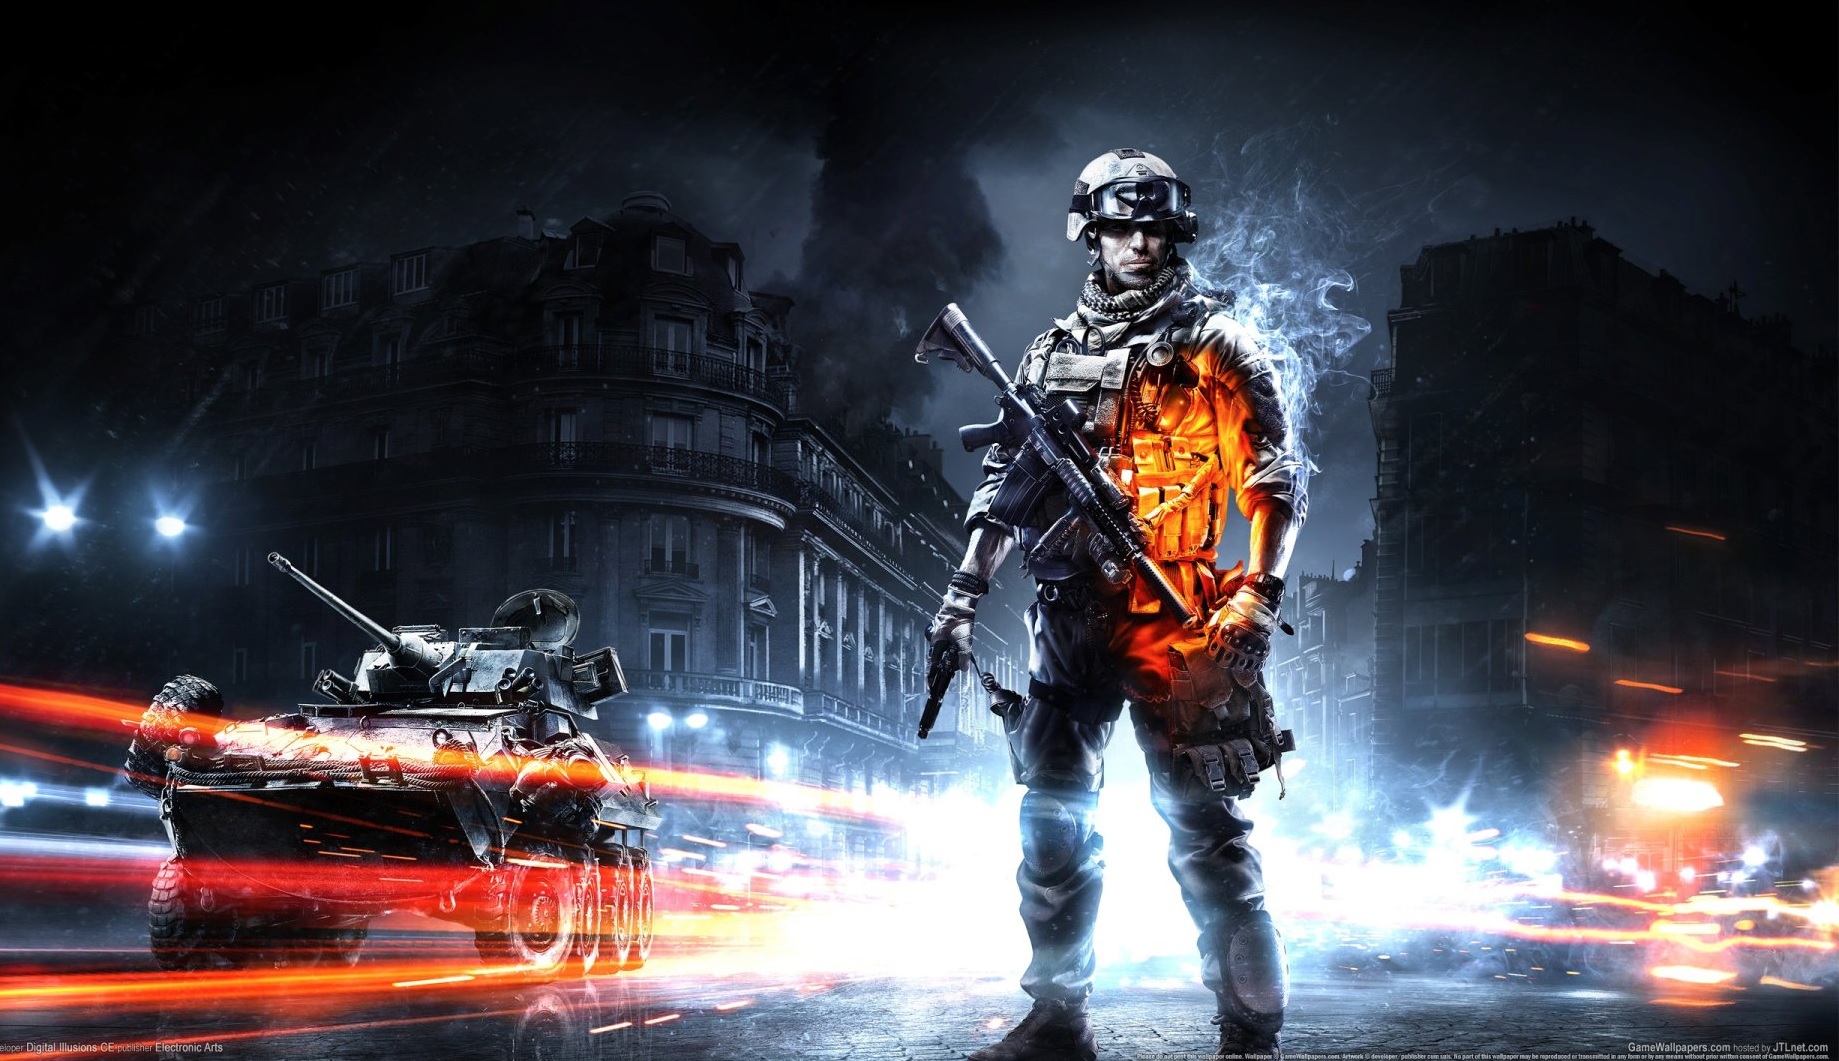 Battlefield 4 Is FREE To Own Via  Prime Gaming Ahead of Battlefield 6  Reveal